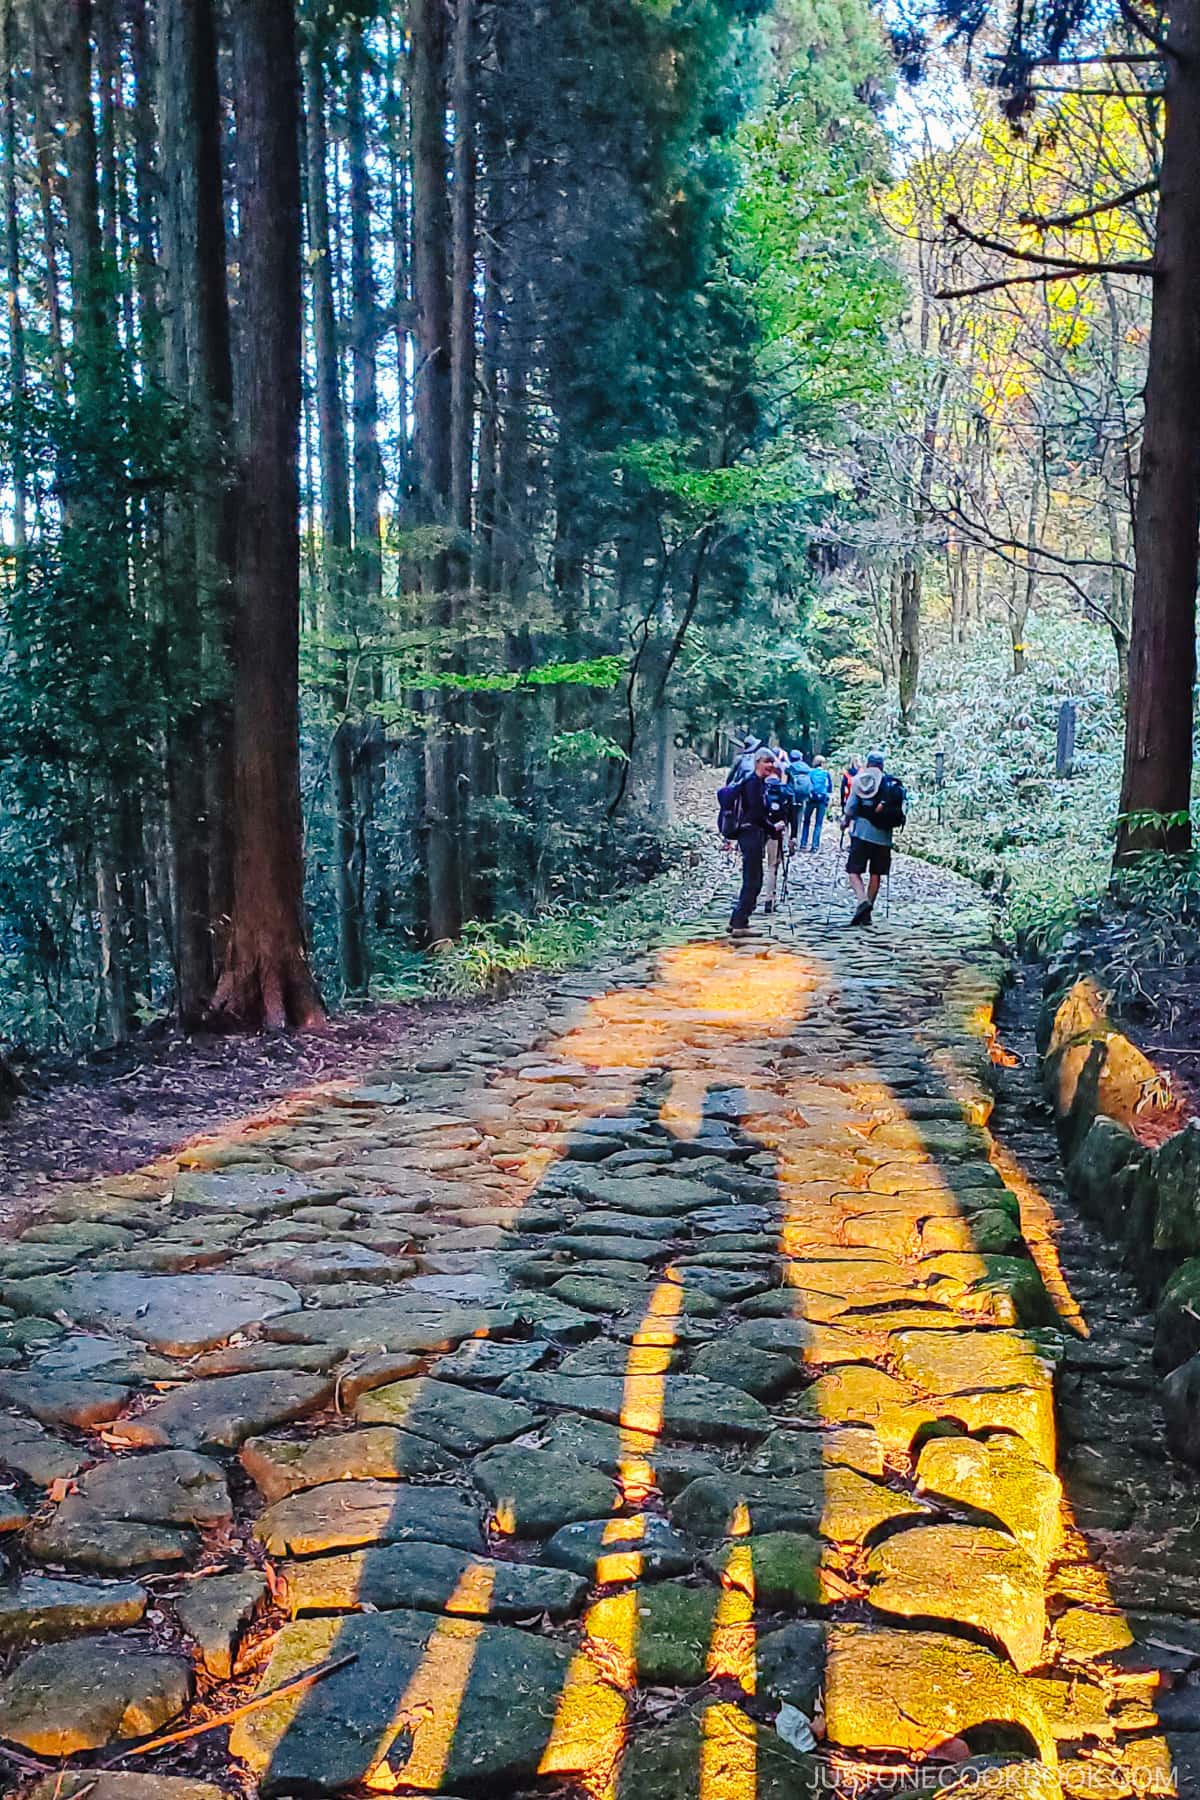 Ishidatami stone paving on the way to Shincha